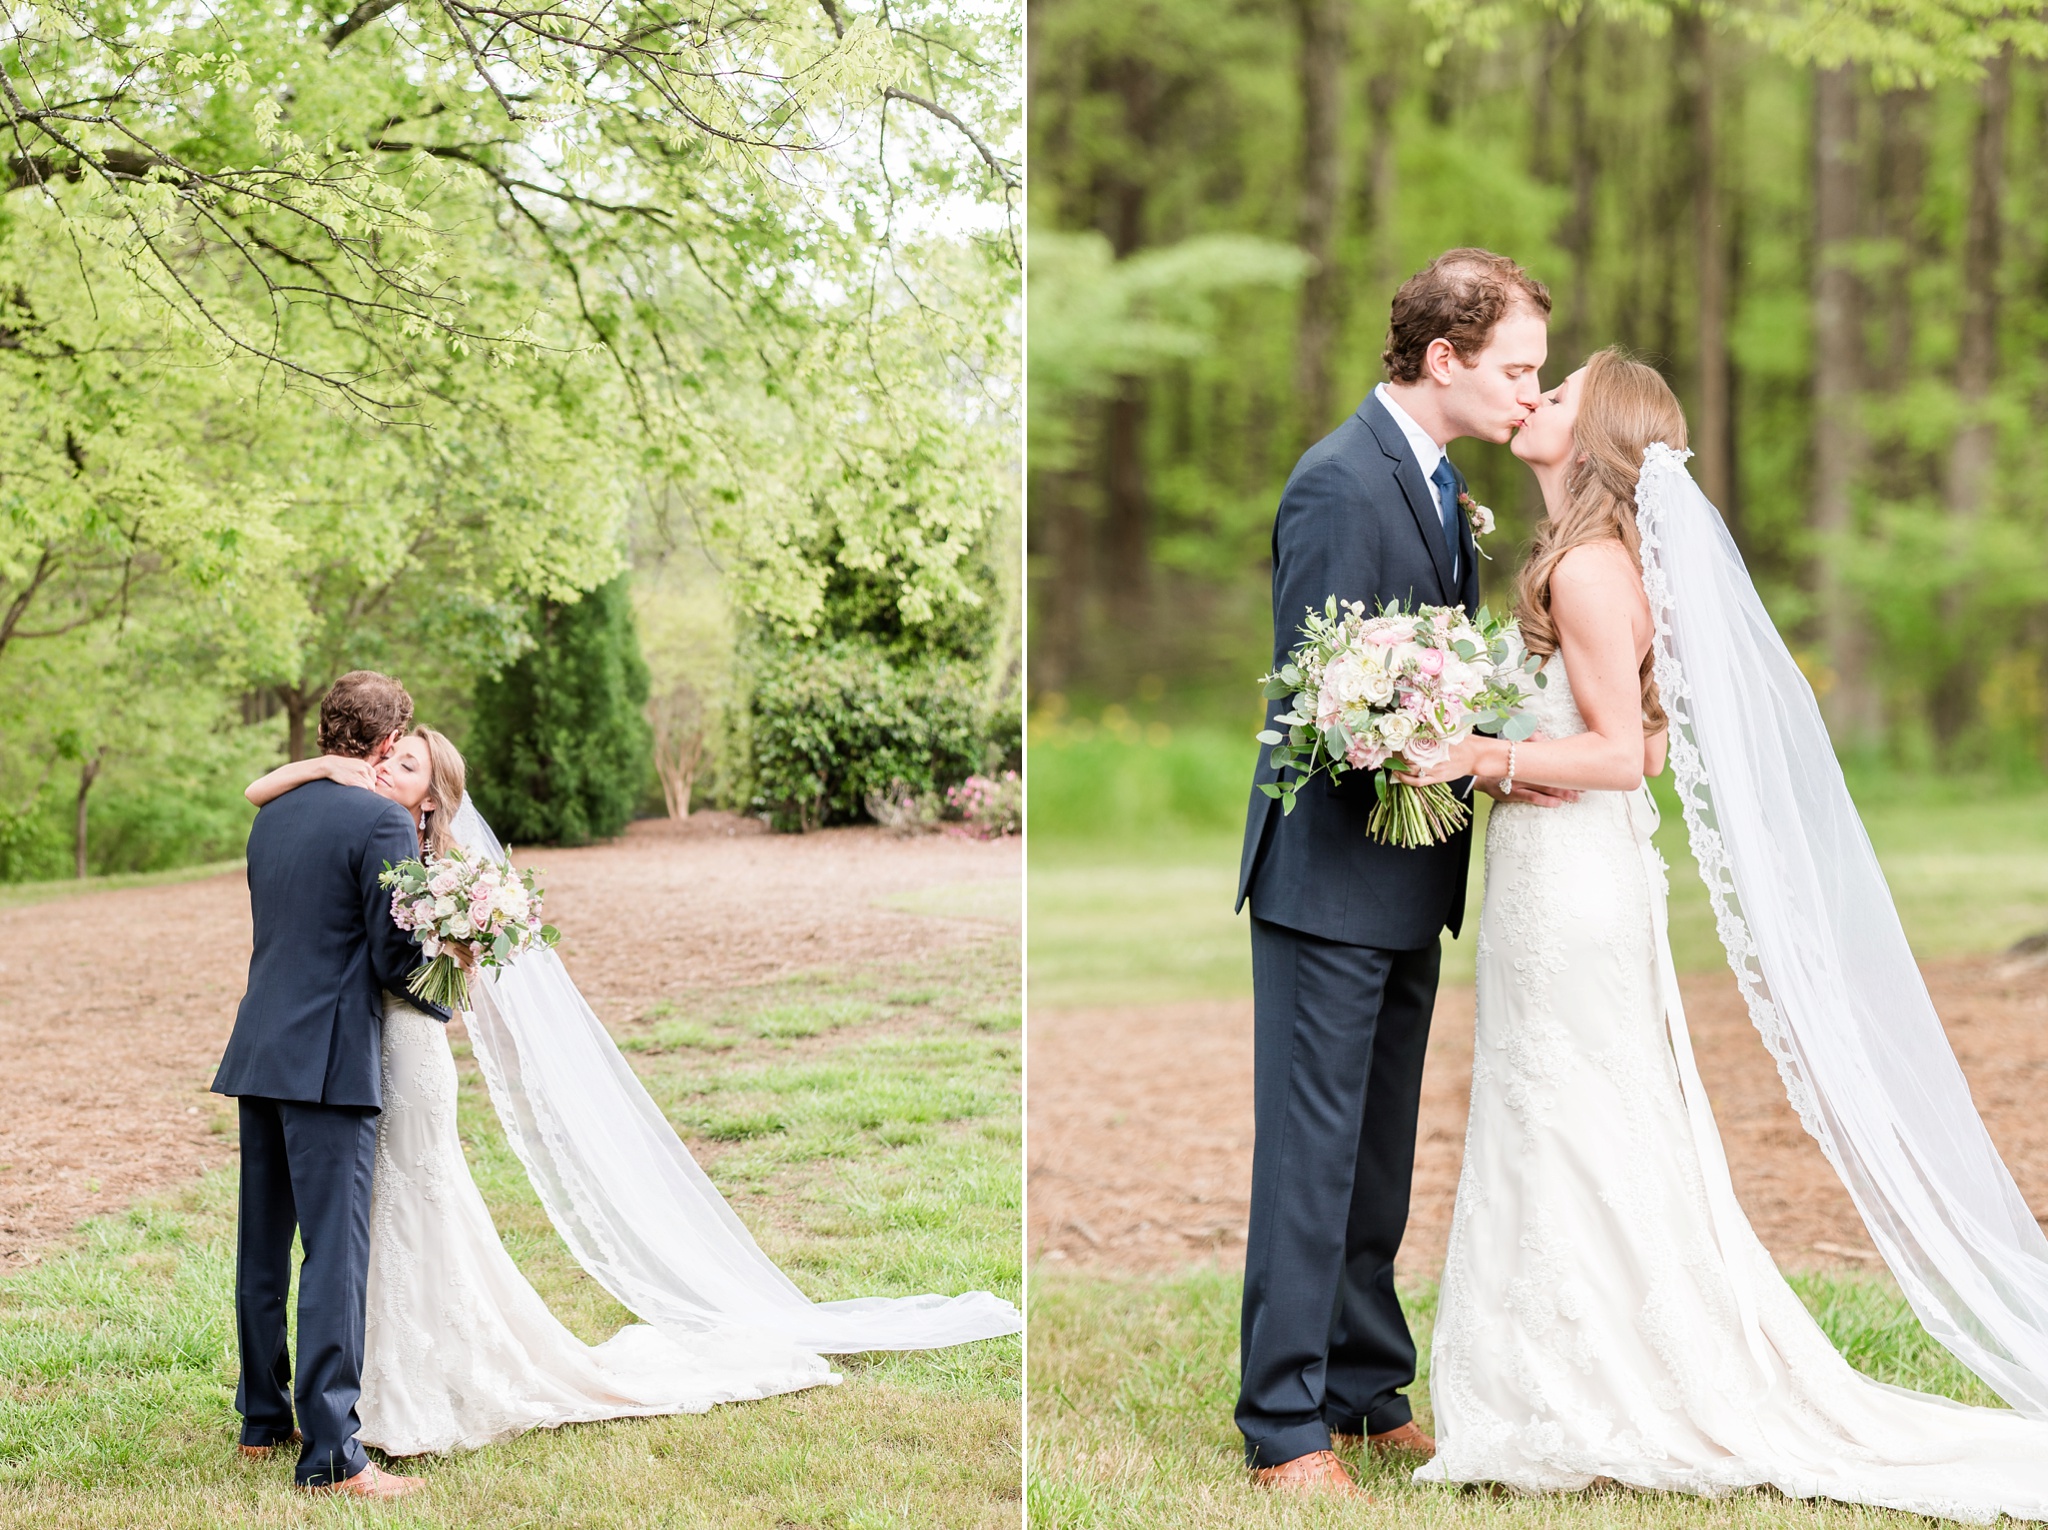 Sonnet House Blush and Gold Spring Wedding | Birmingham Alabama Wedding Photographers_0032.jpg